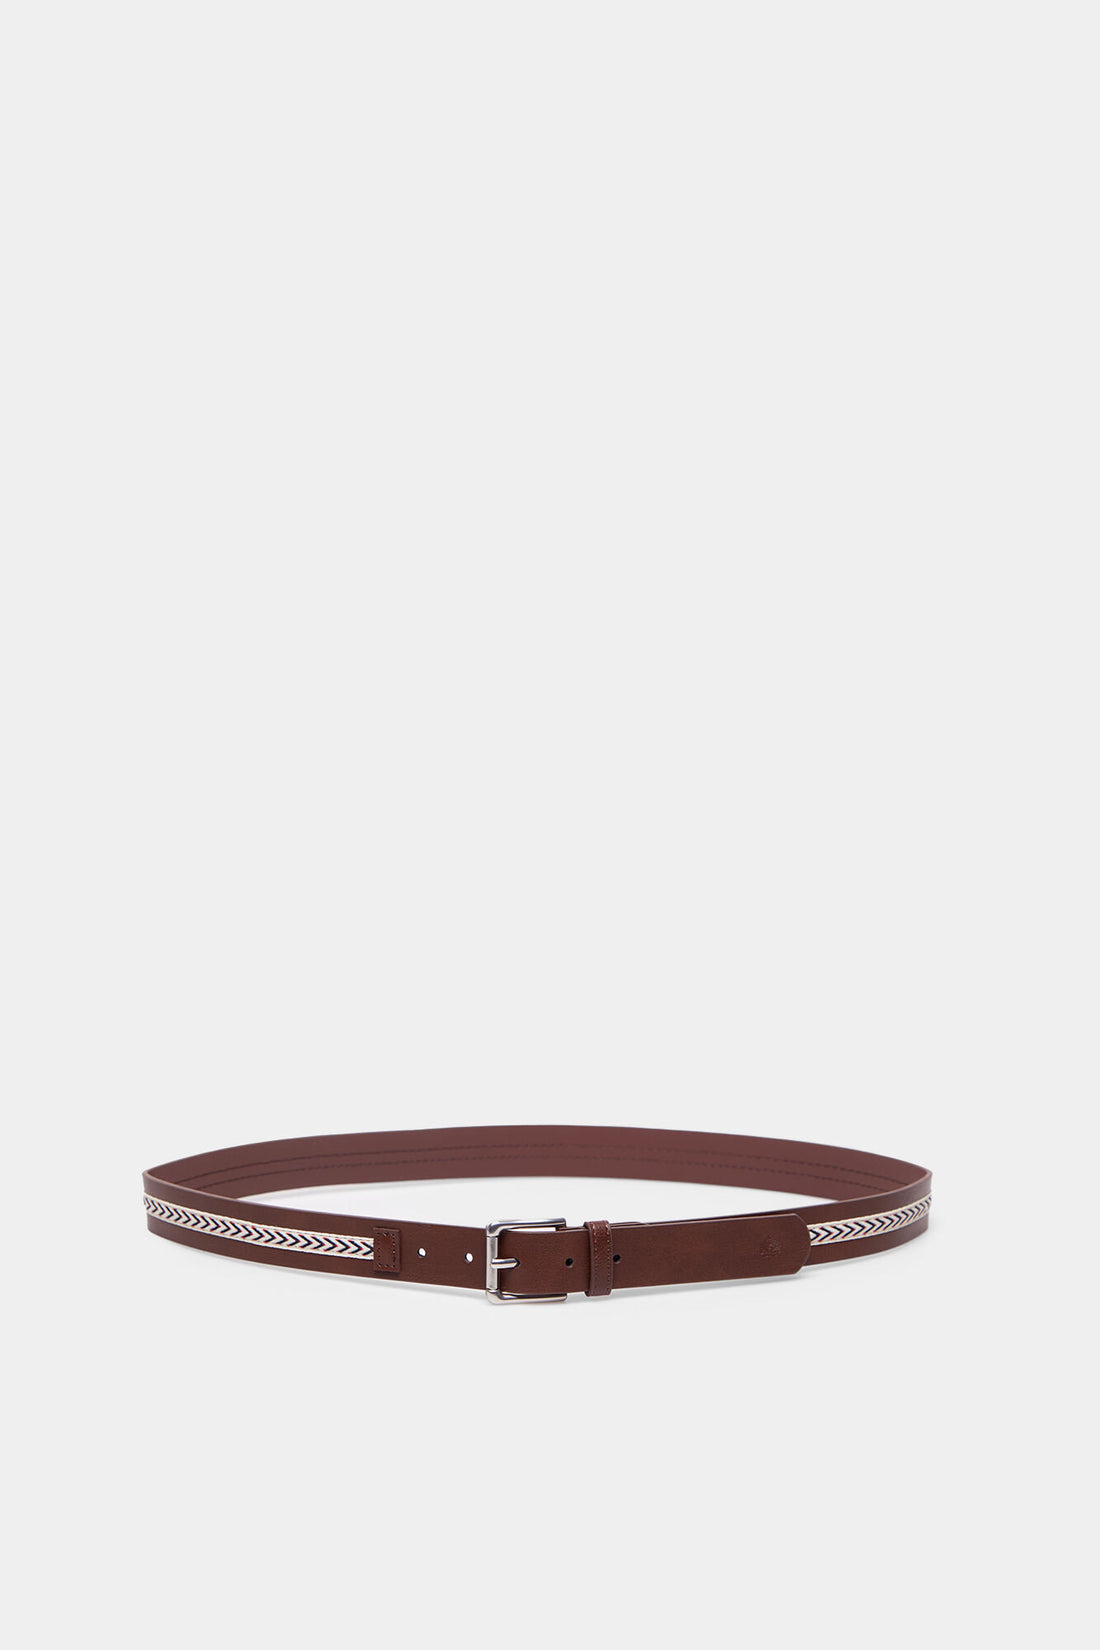 Thin Brown Belt With Design_2867125_33_01